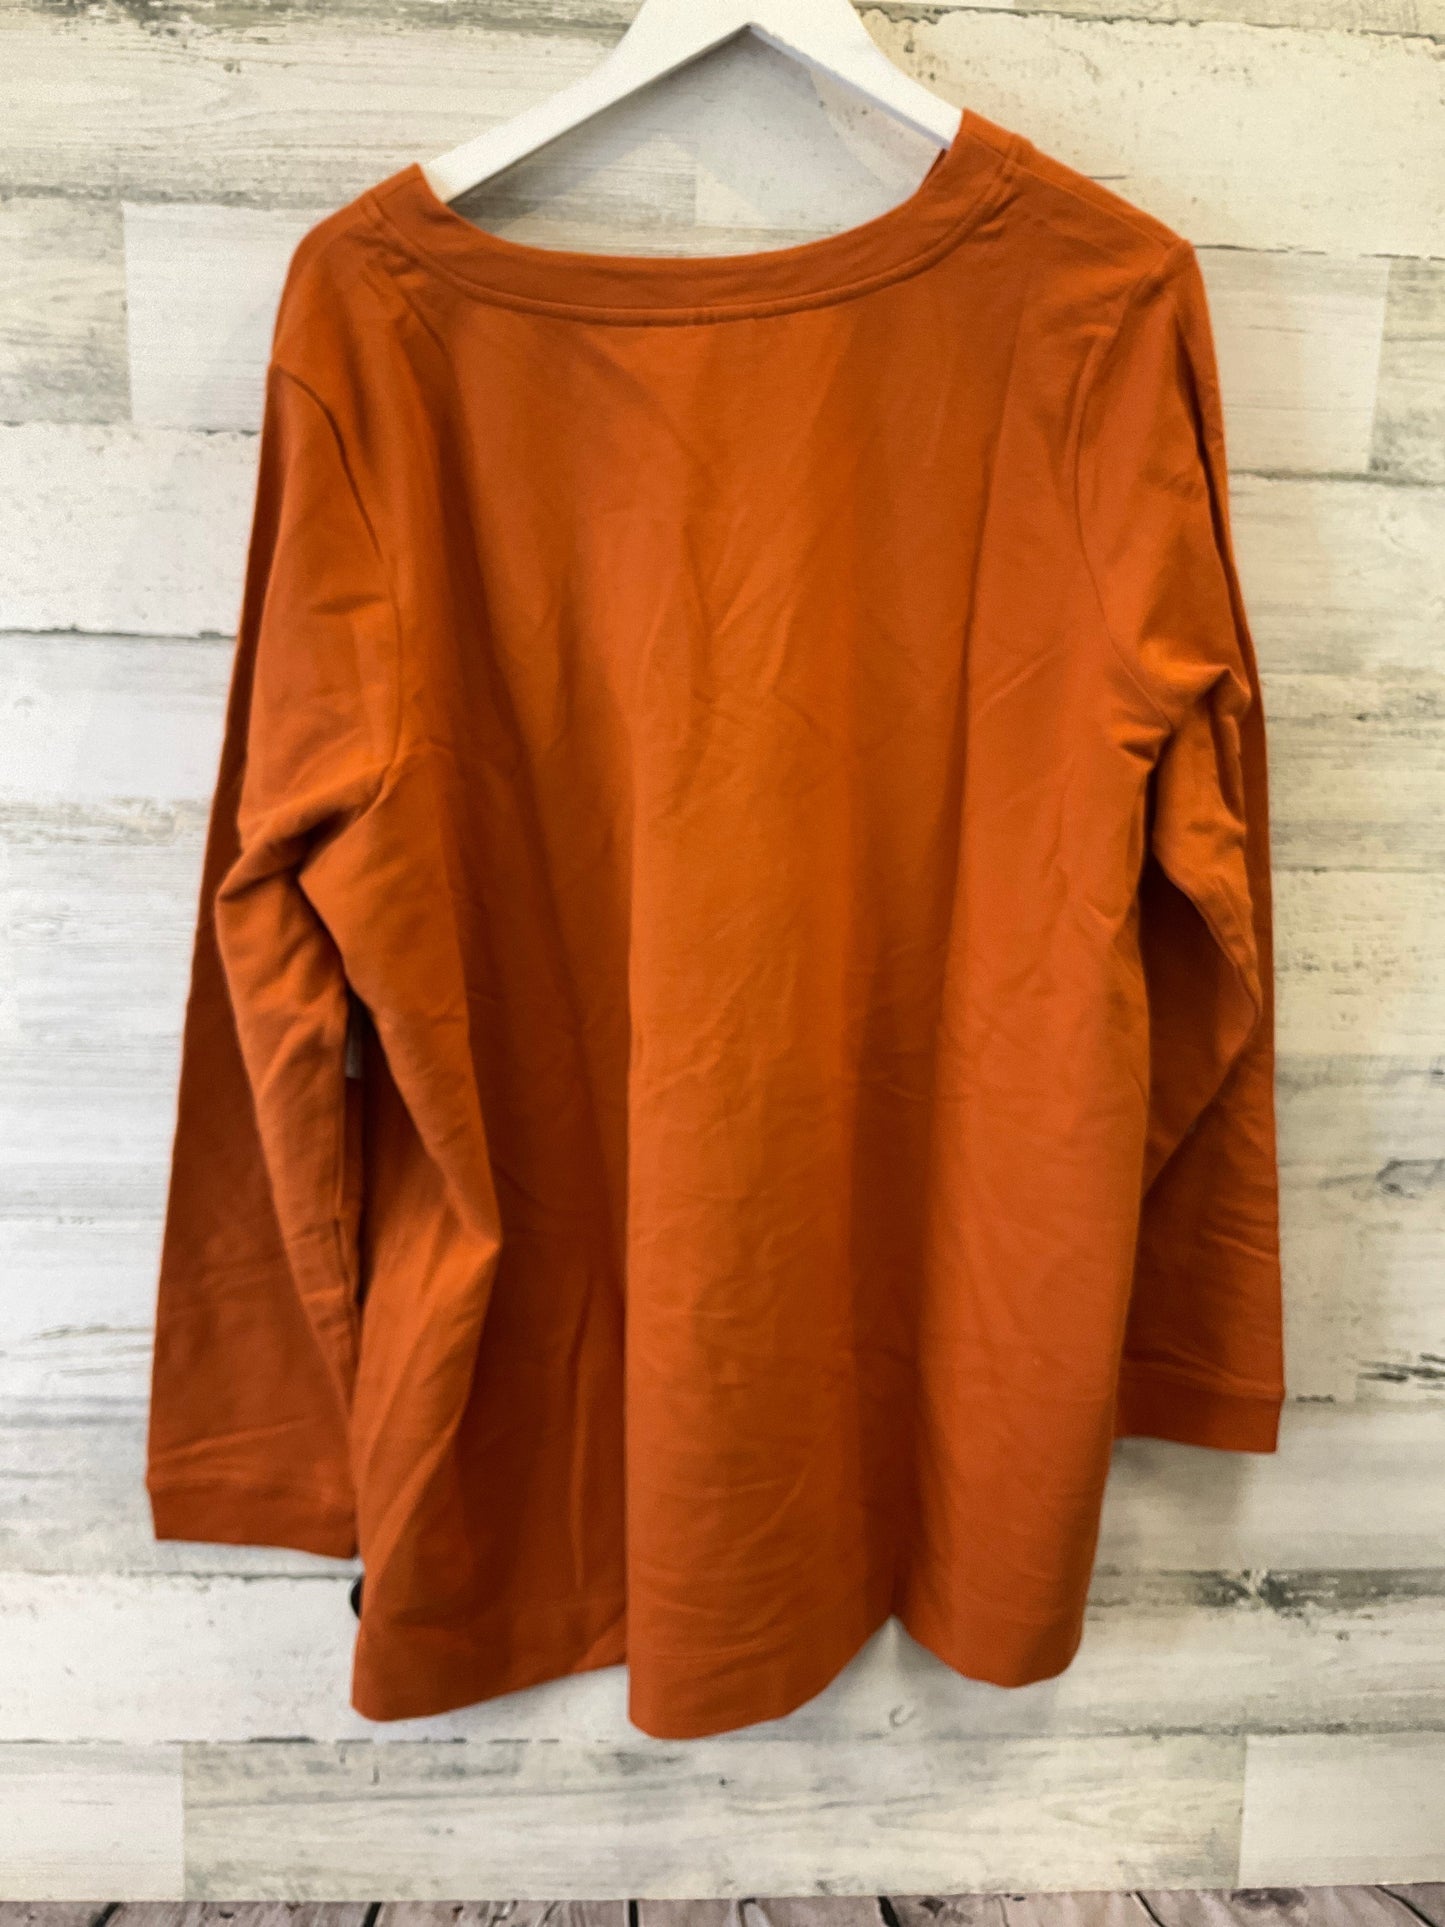 Orange Top Long Sleeve Denim And Company, Size 2x